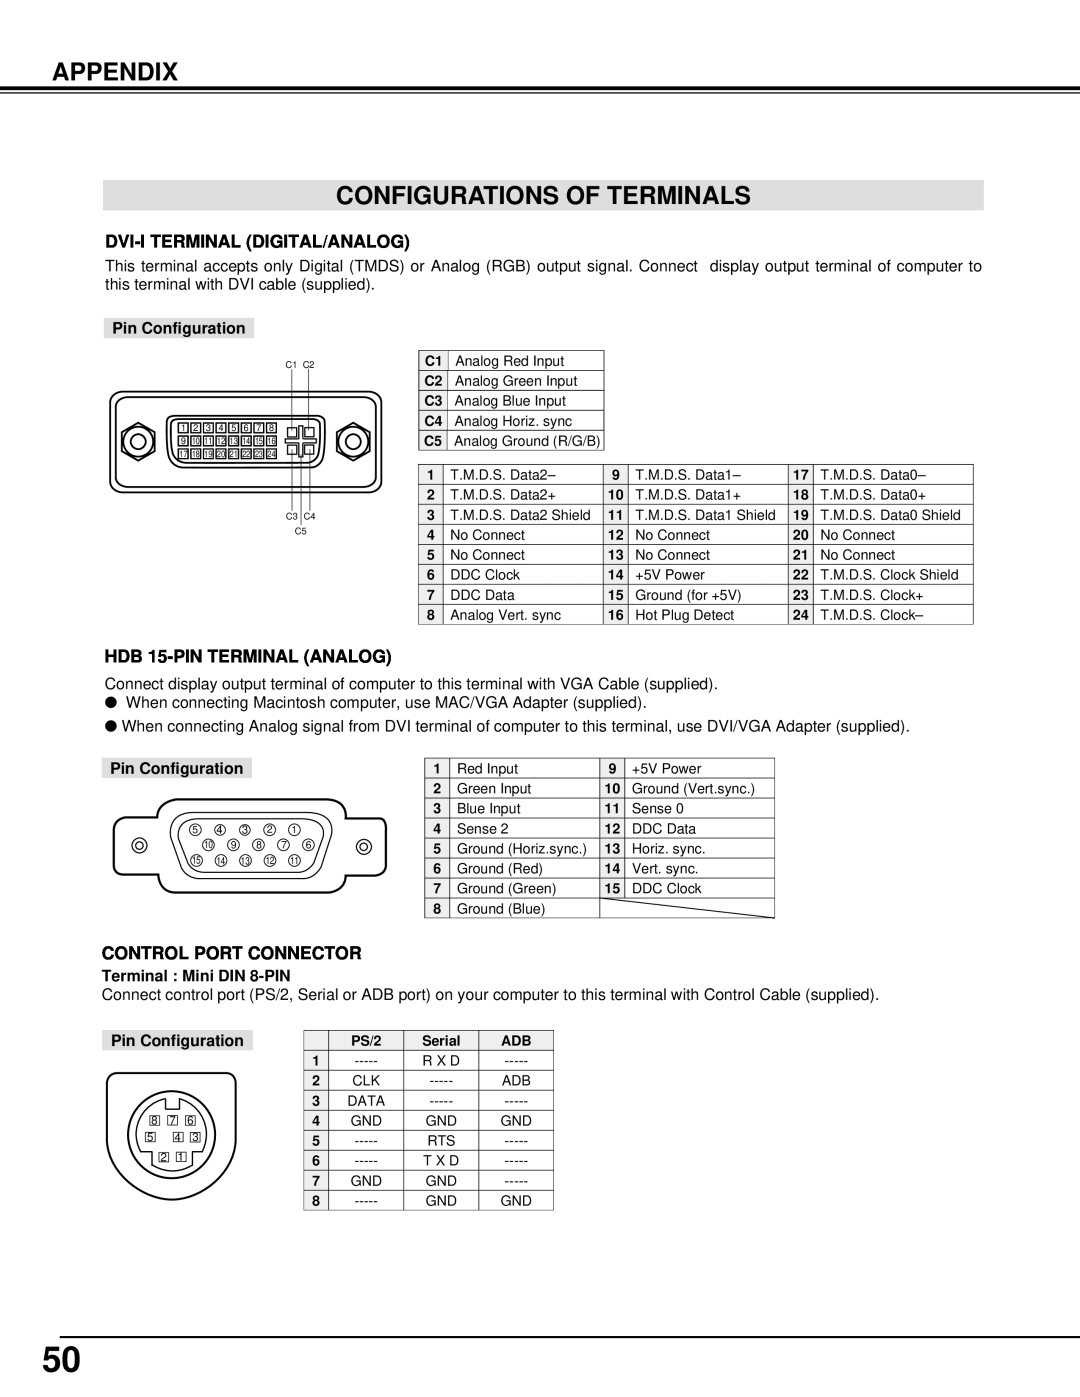 Eiki LC-UXT1 Appendix Configurations Of Terminals, Dvi-I Terminal Digital/Analog, HDB 15-PIN TERMINAL ANALOG 